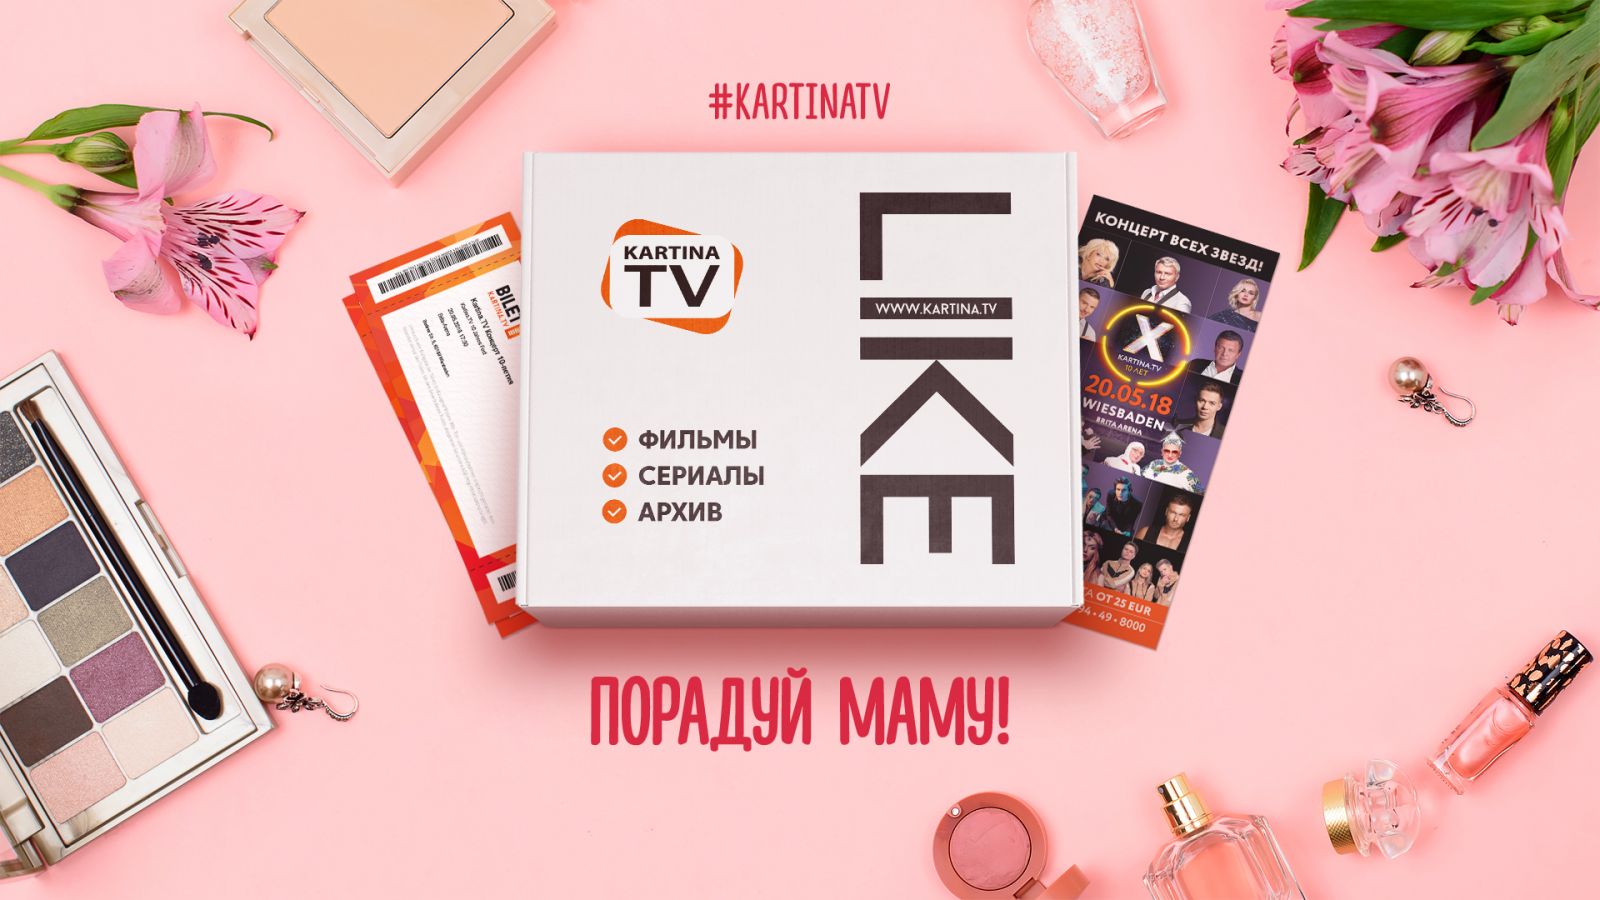 Kartina.TV поздравляет с Днём матери